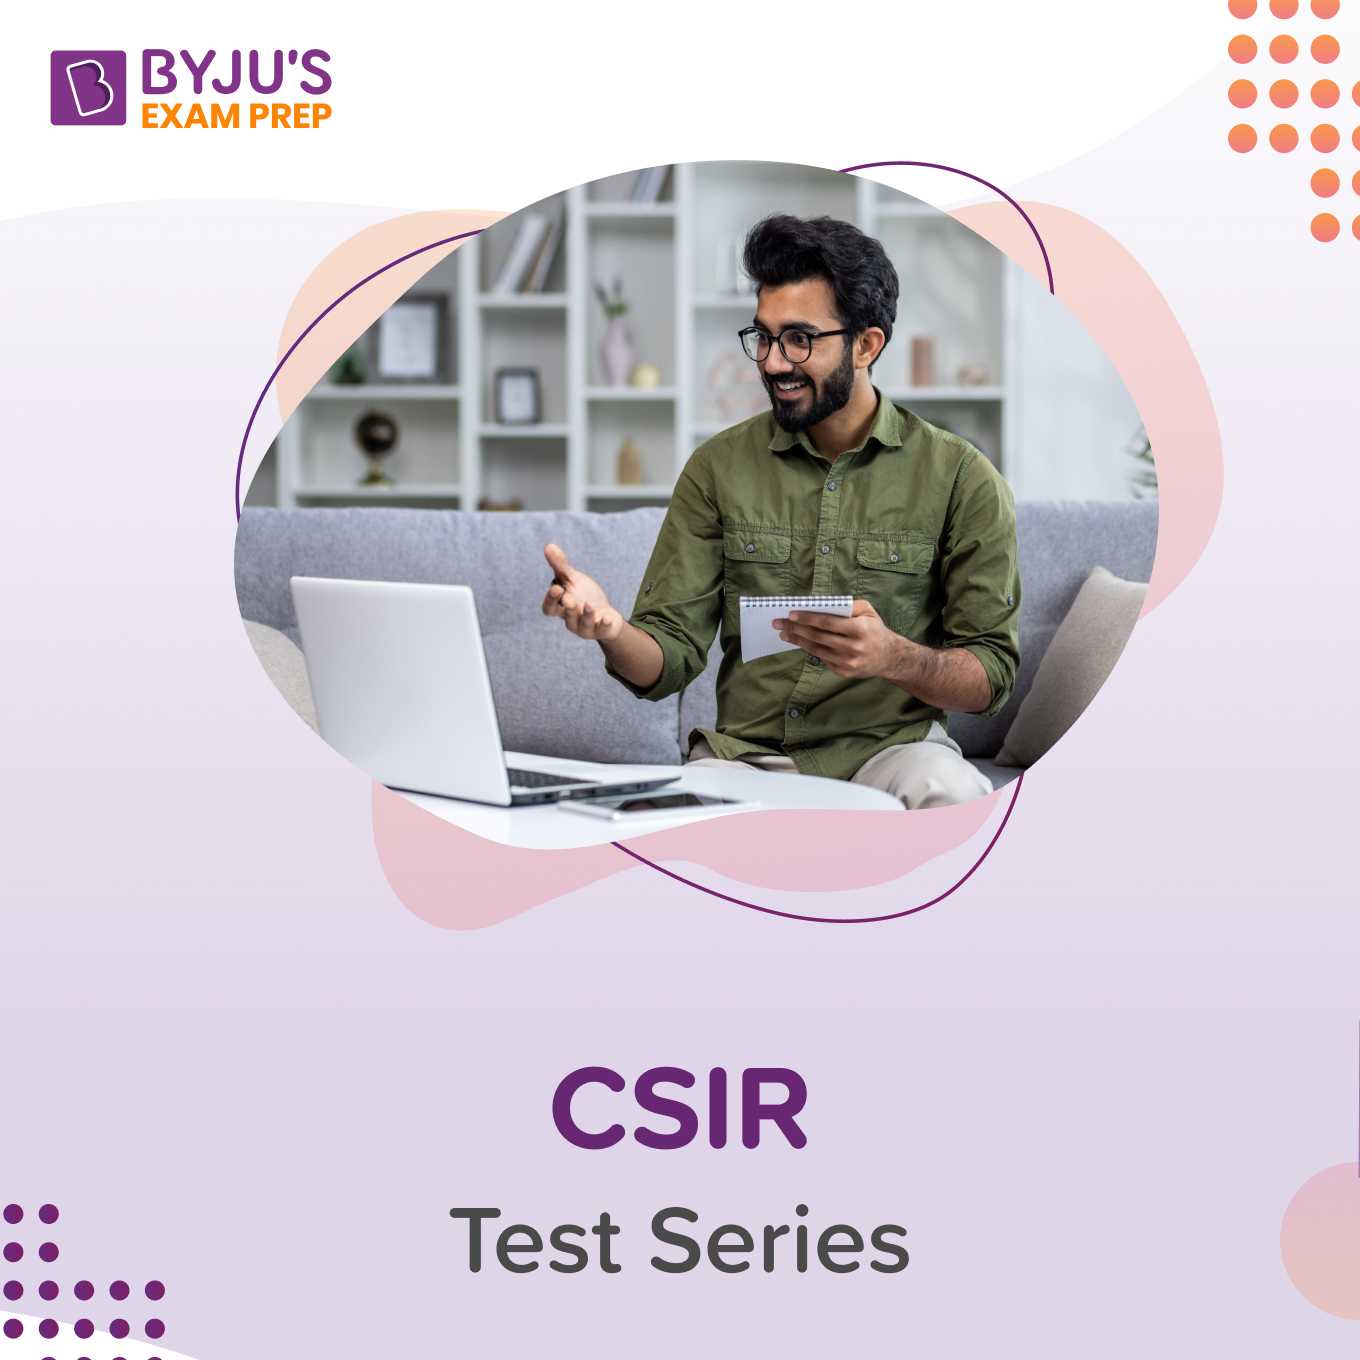 CSIR - Test Series